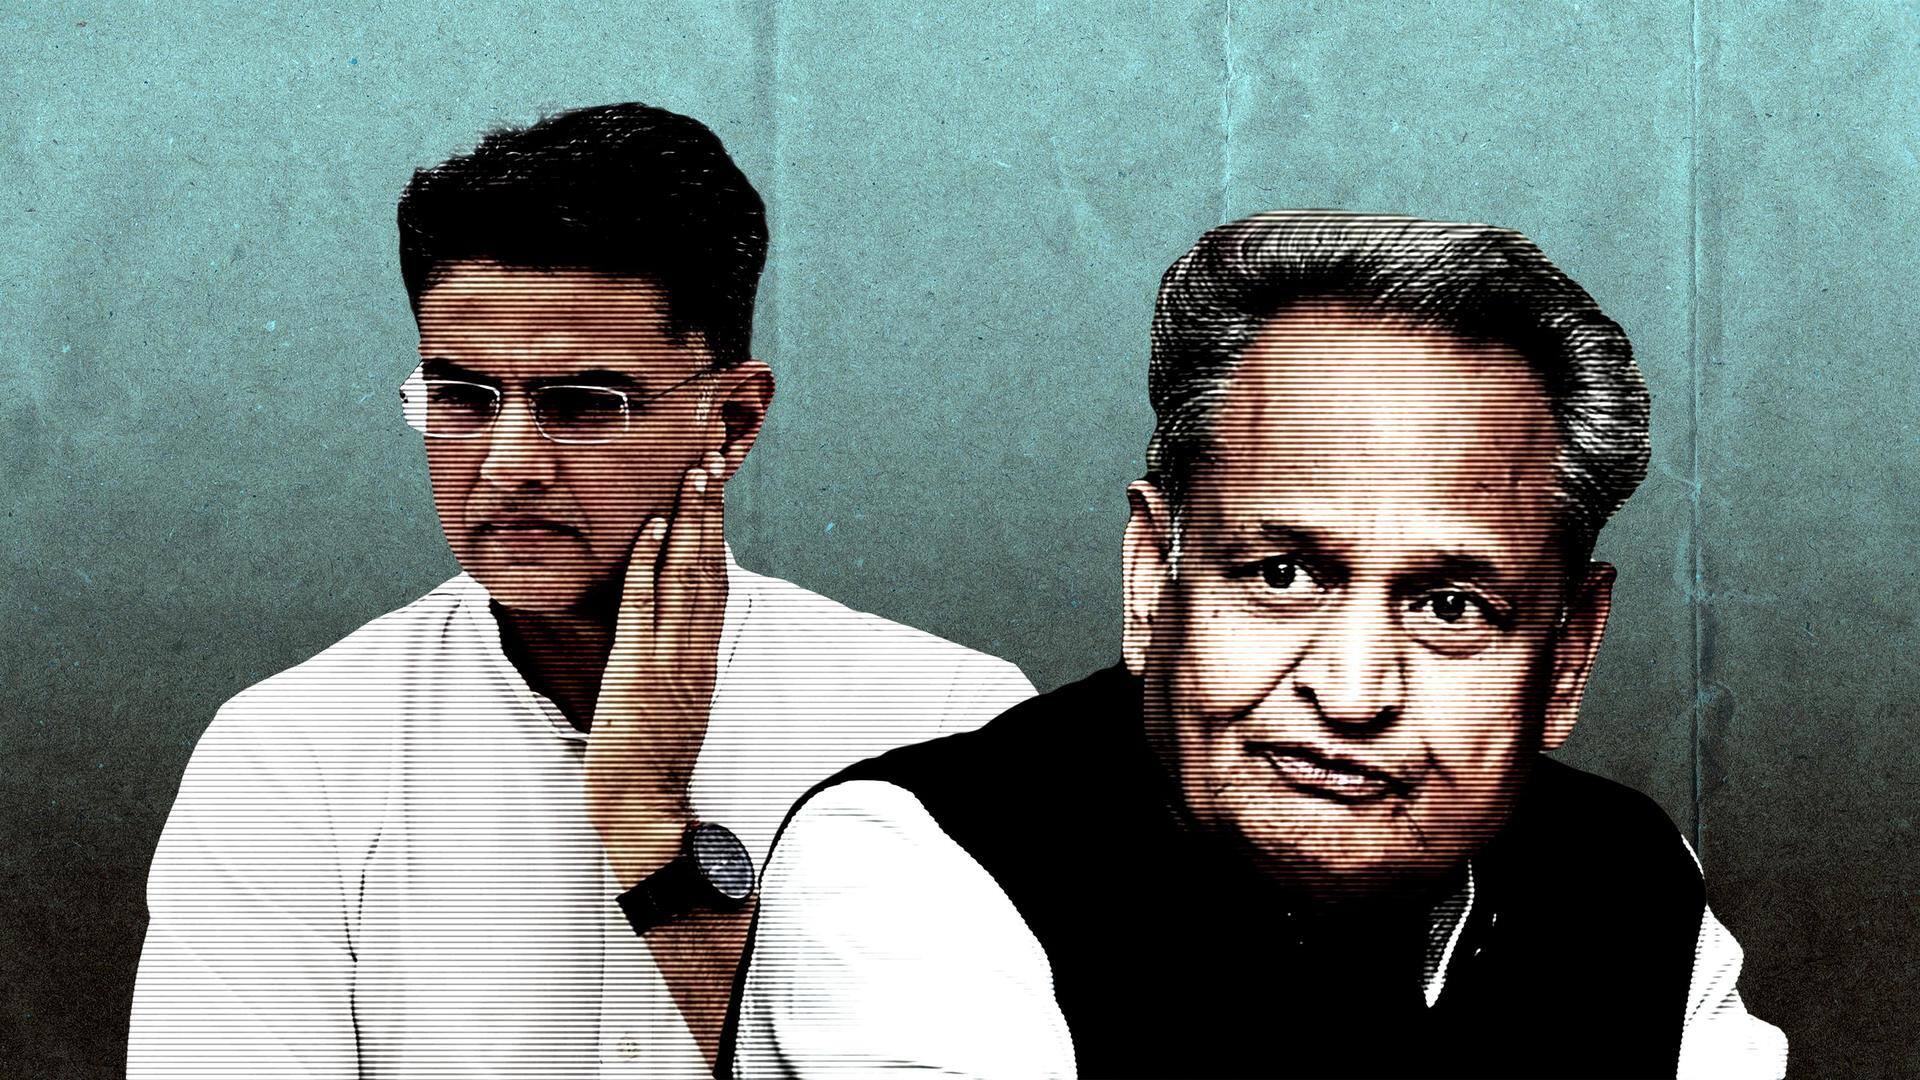 Restore my dignity: Sachin Pilot to Congress amid Rajasthan crisis